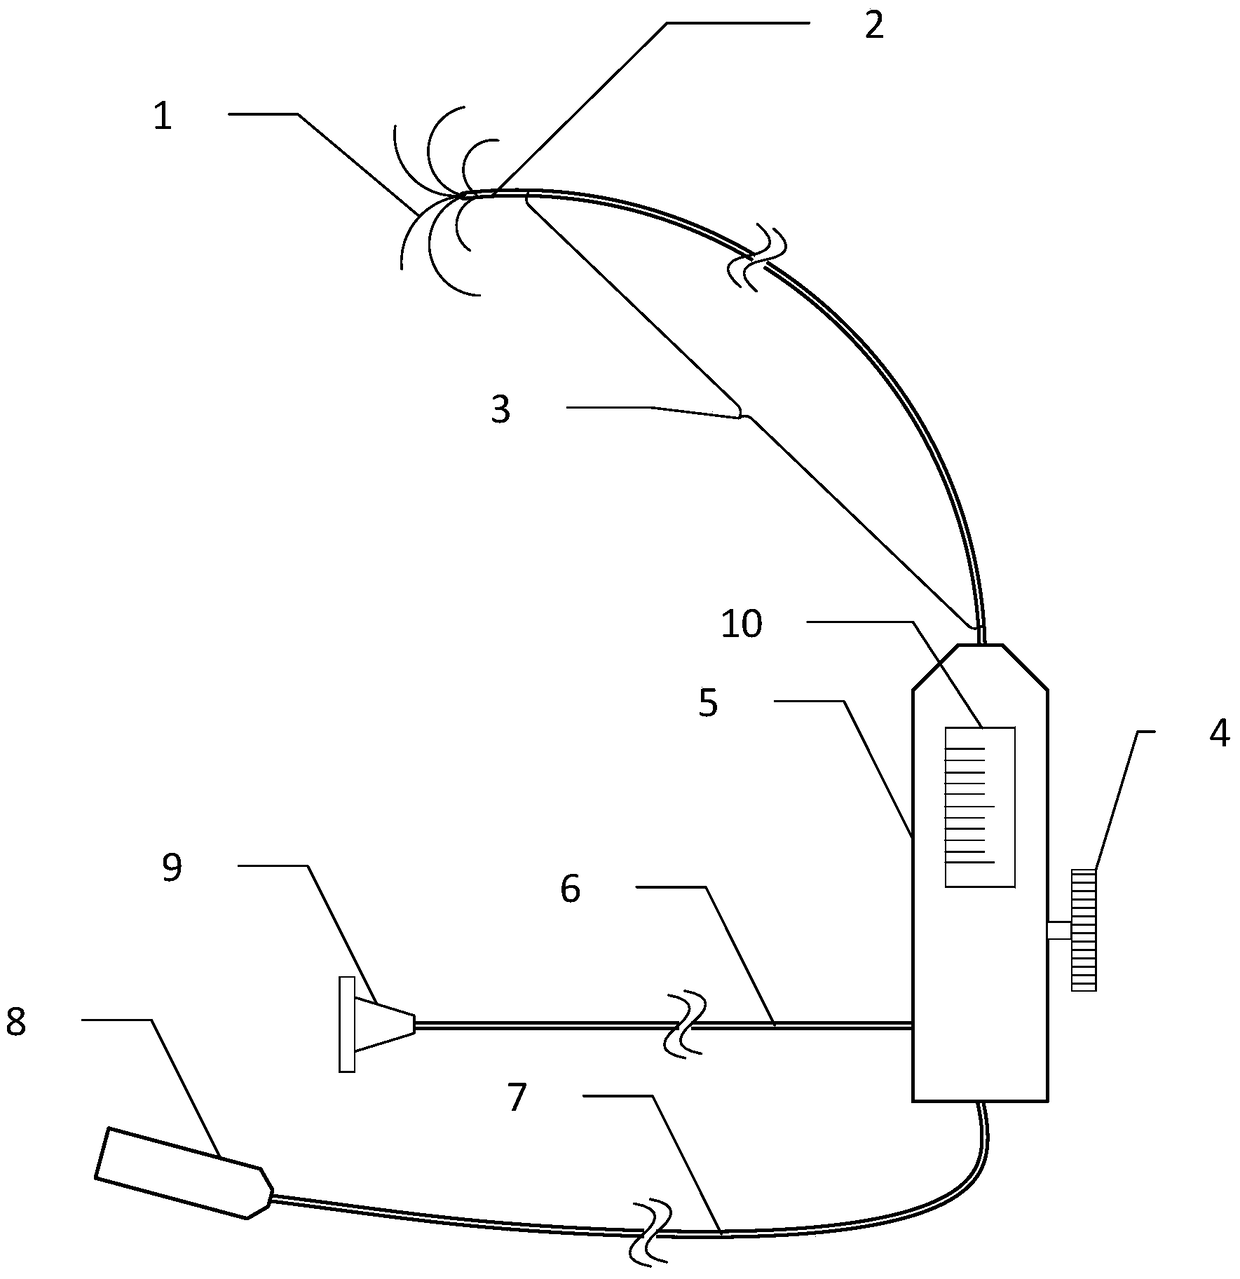 Umbrella-shaped radiofrequency ablation electrode needle for endoscope